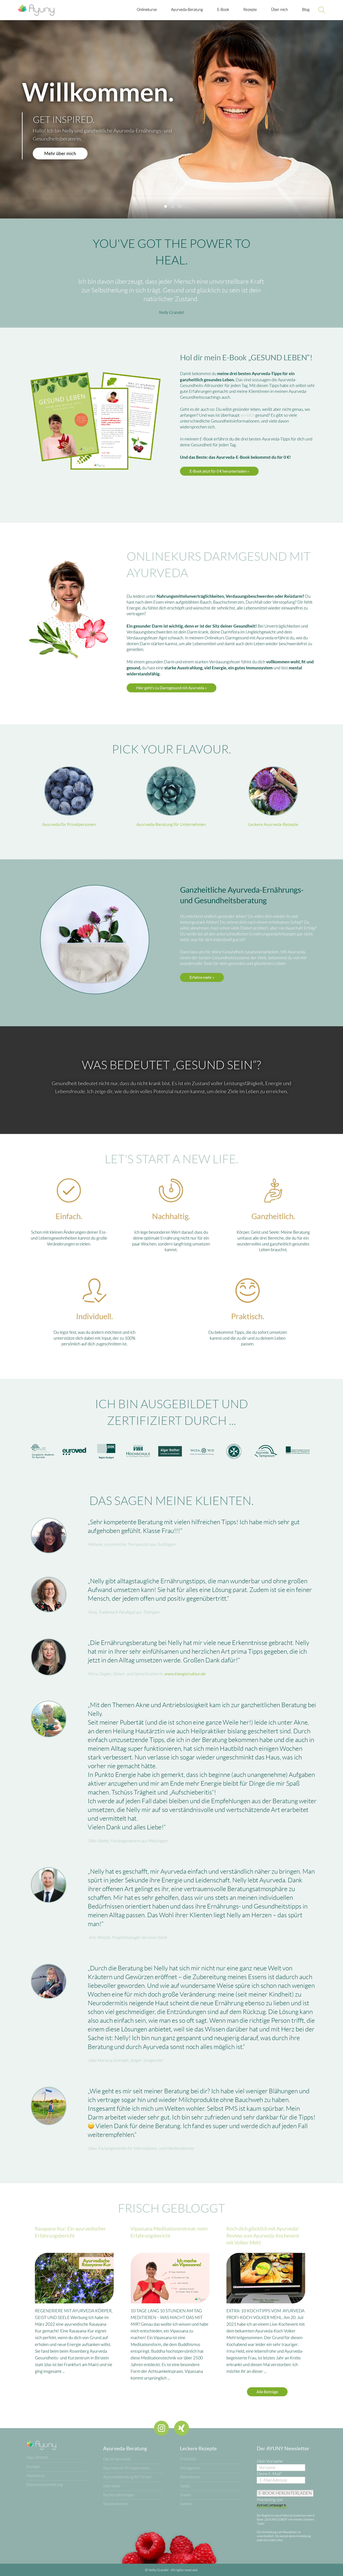 Webdesign Berlin Websitegestaltung Ernährungsberatung gesundheit